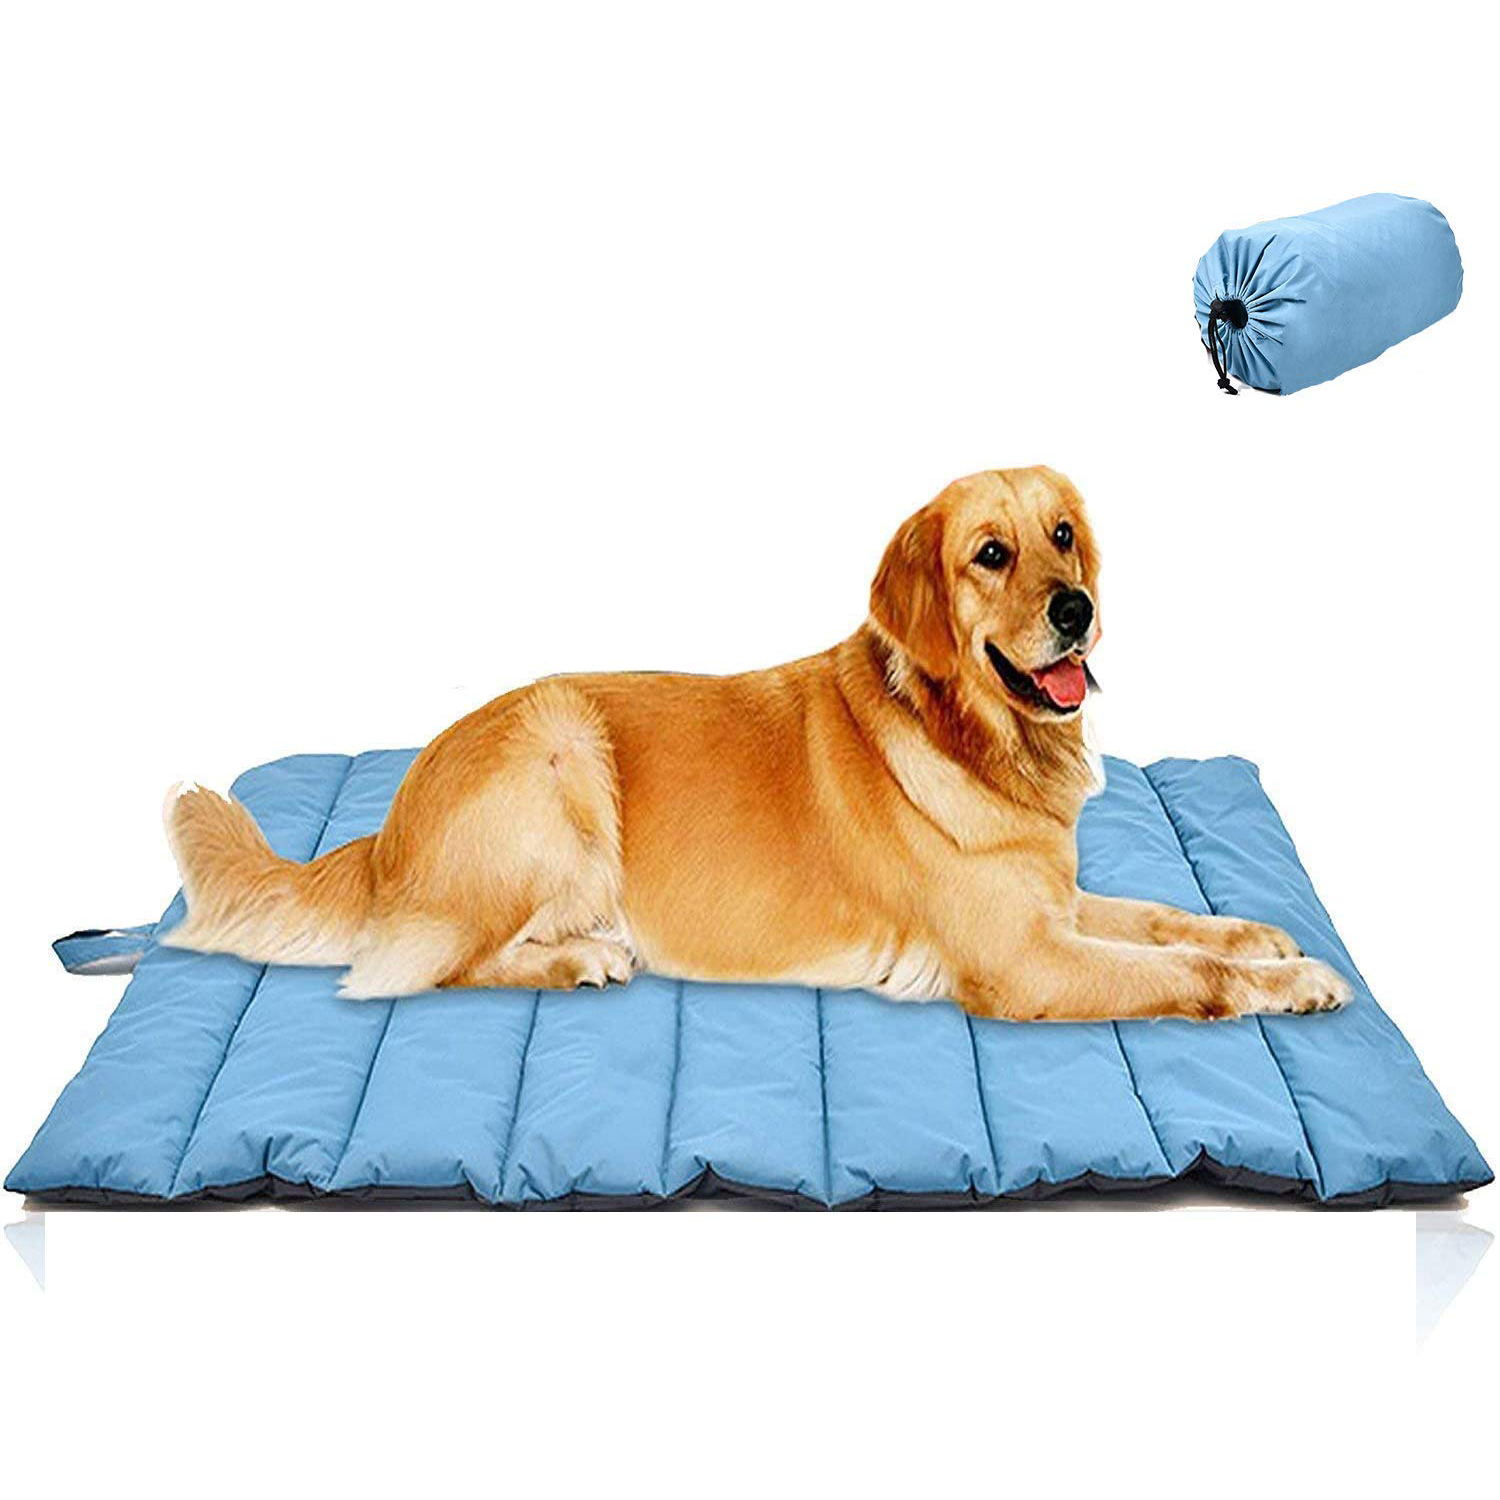 Tappetino per lettino per cani impermeabile e lavabile